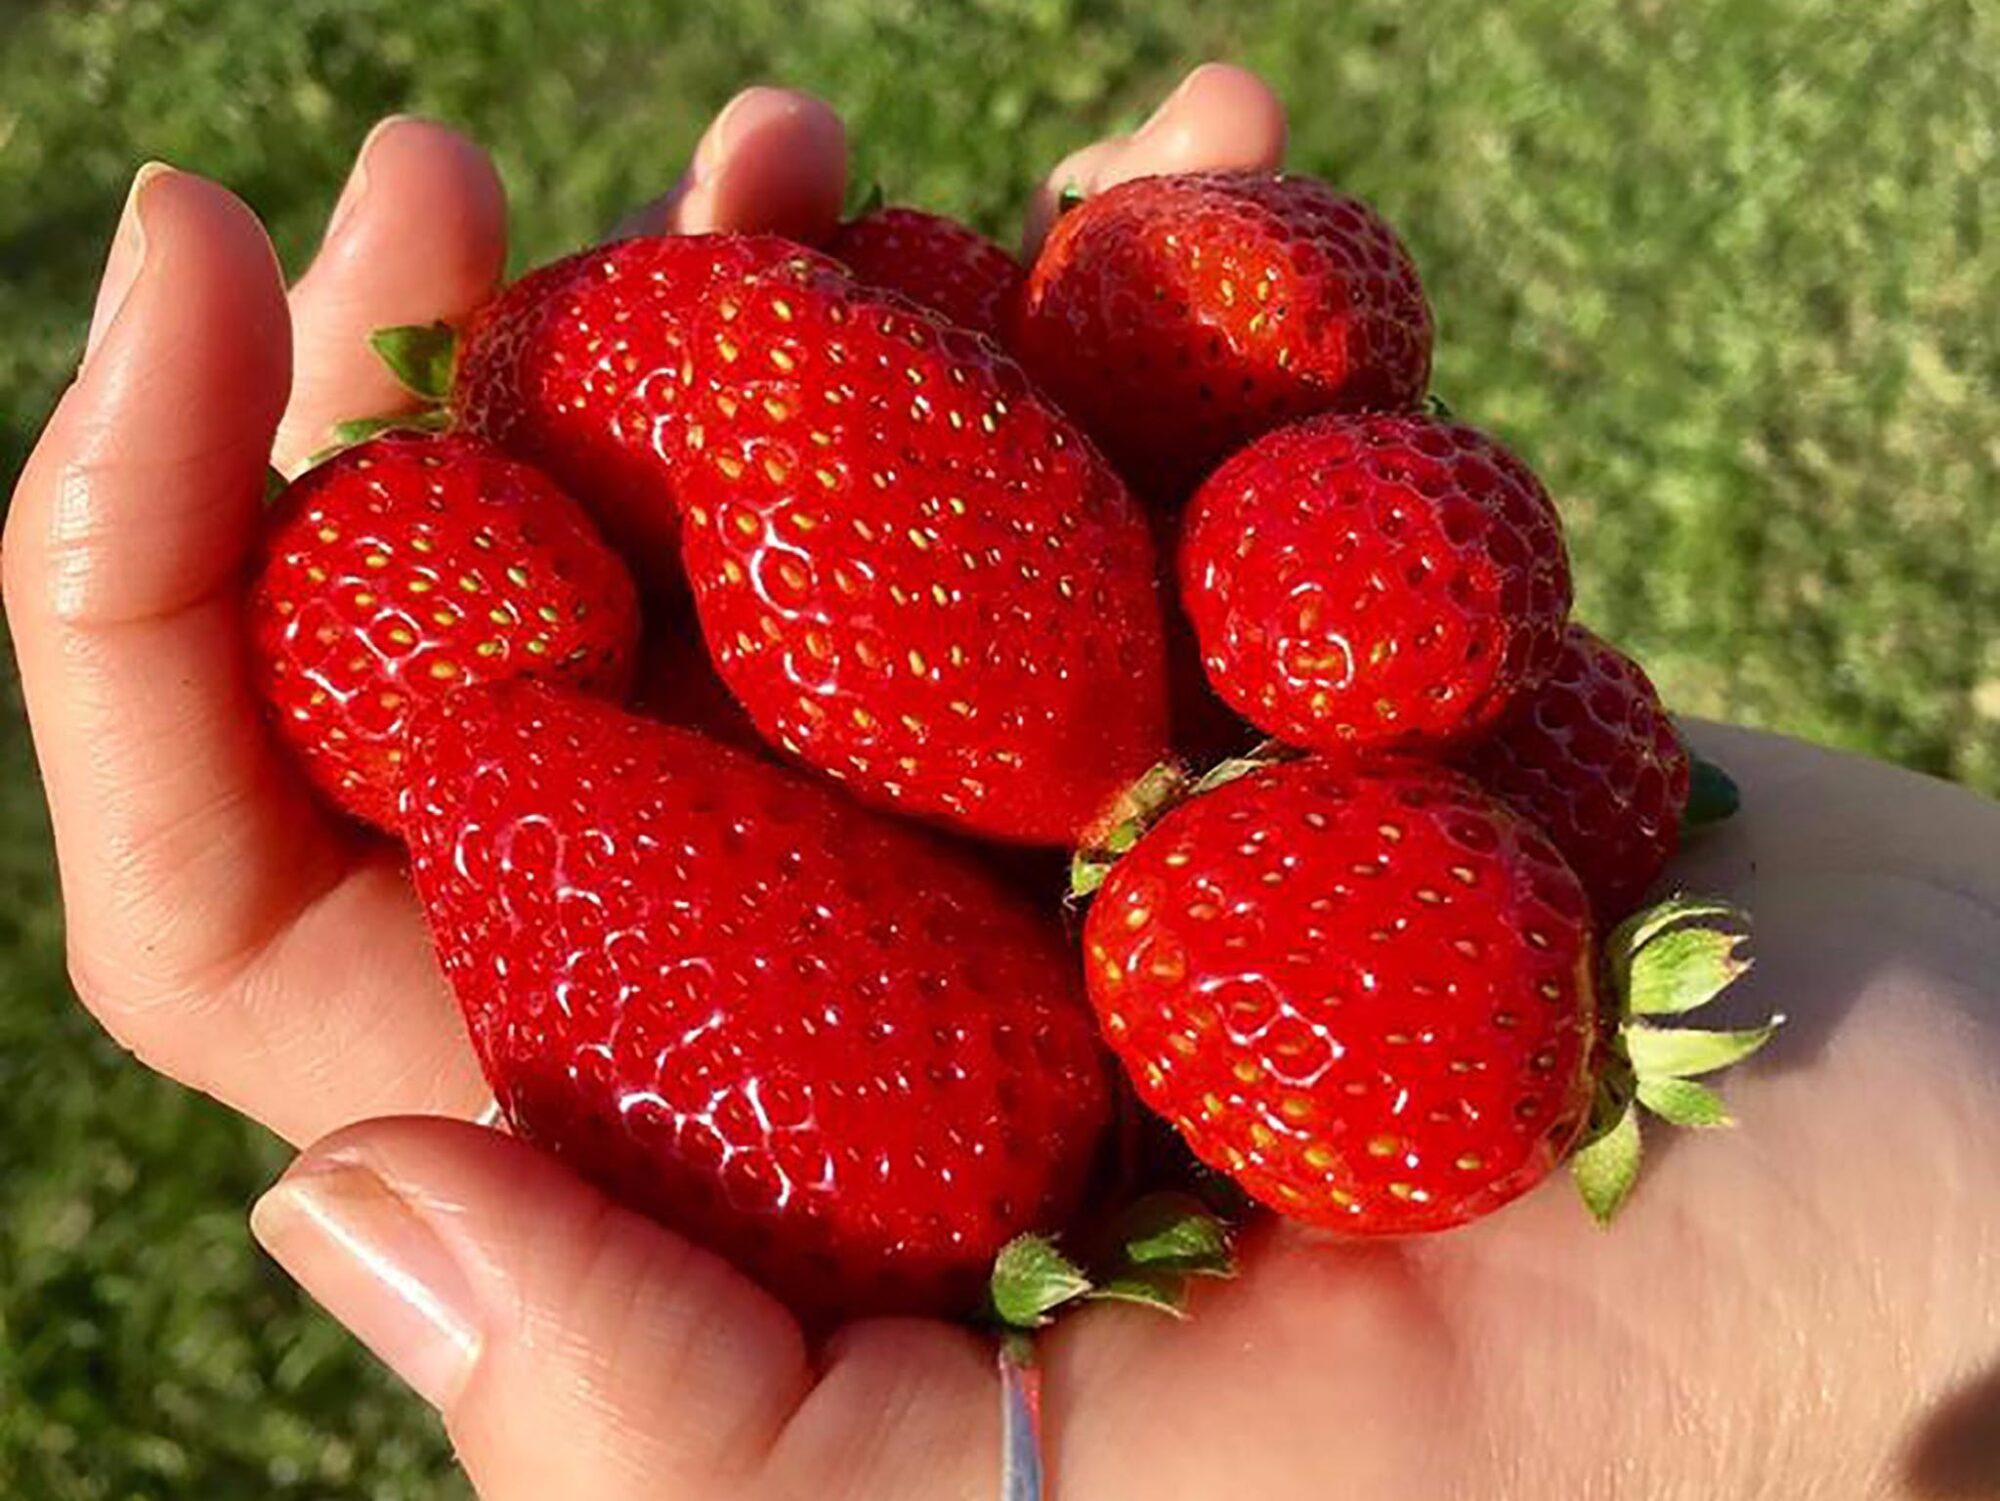 Beechworth Berries - A handful of strawberries